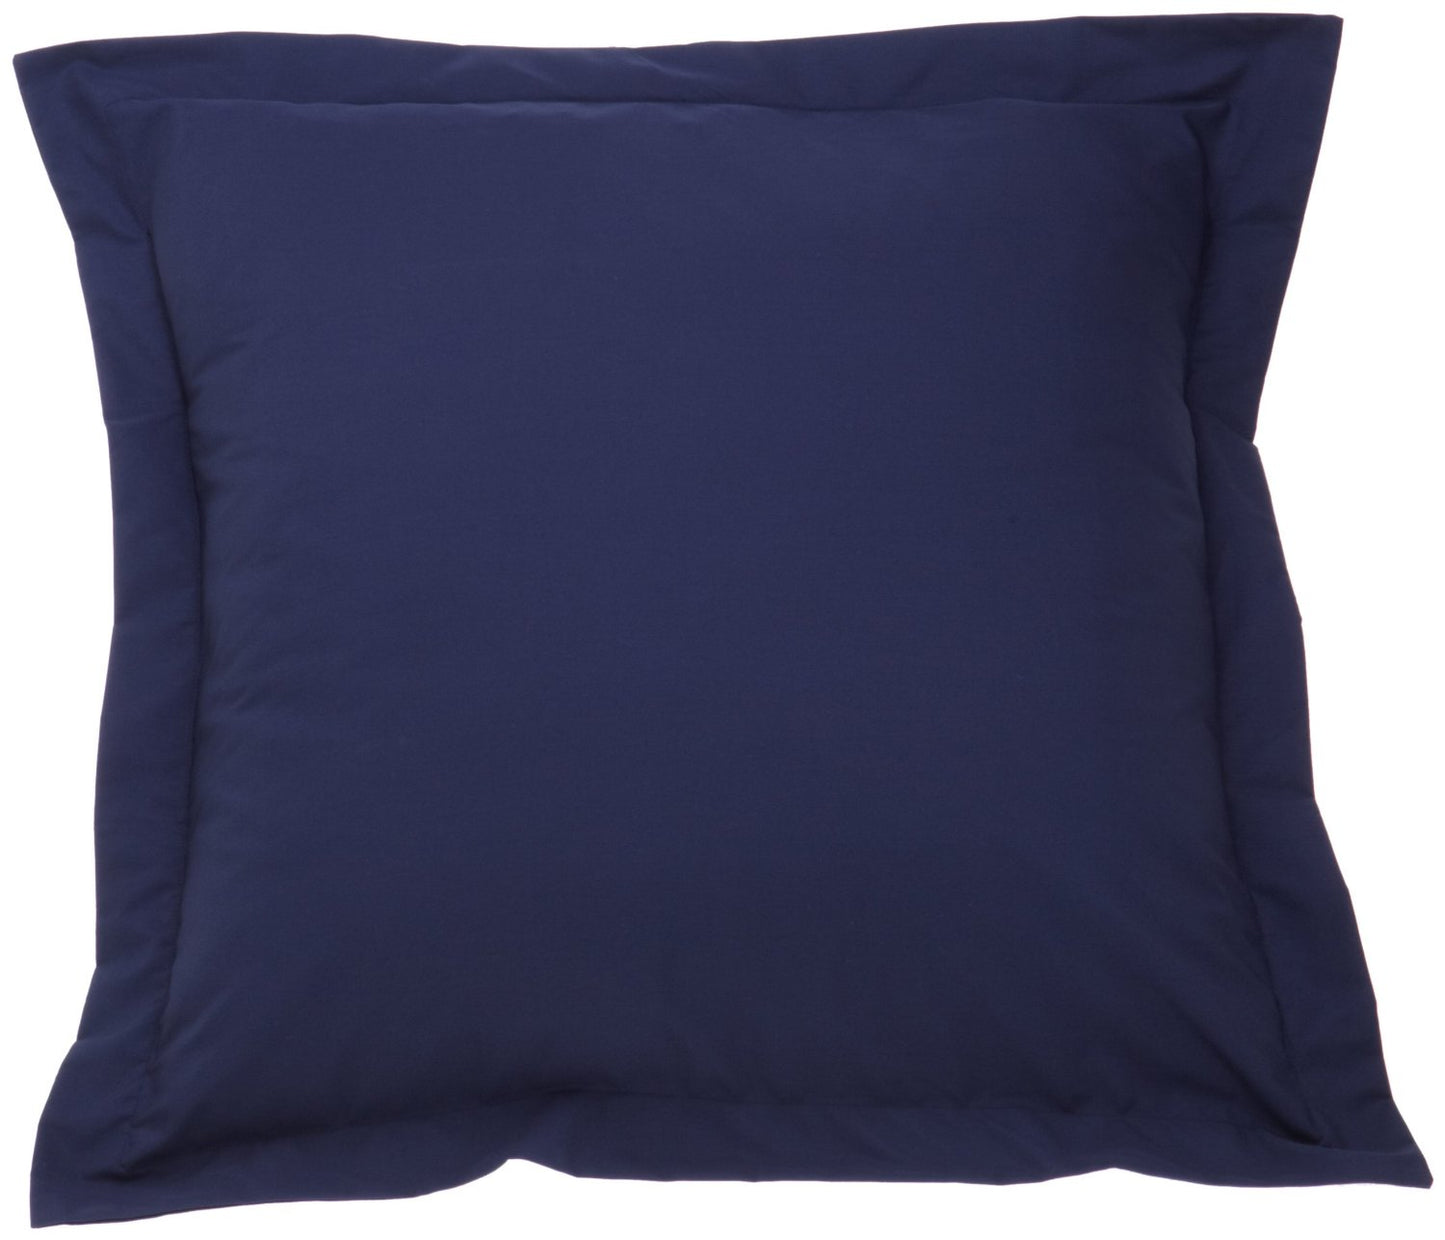 Full Navy Blue Pillow Shams Egyptian Cotton 1000TC - FREE Shipping